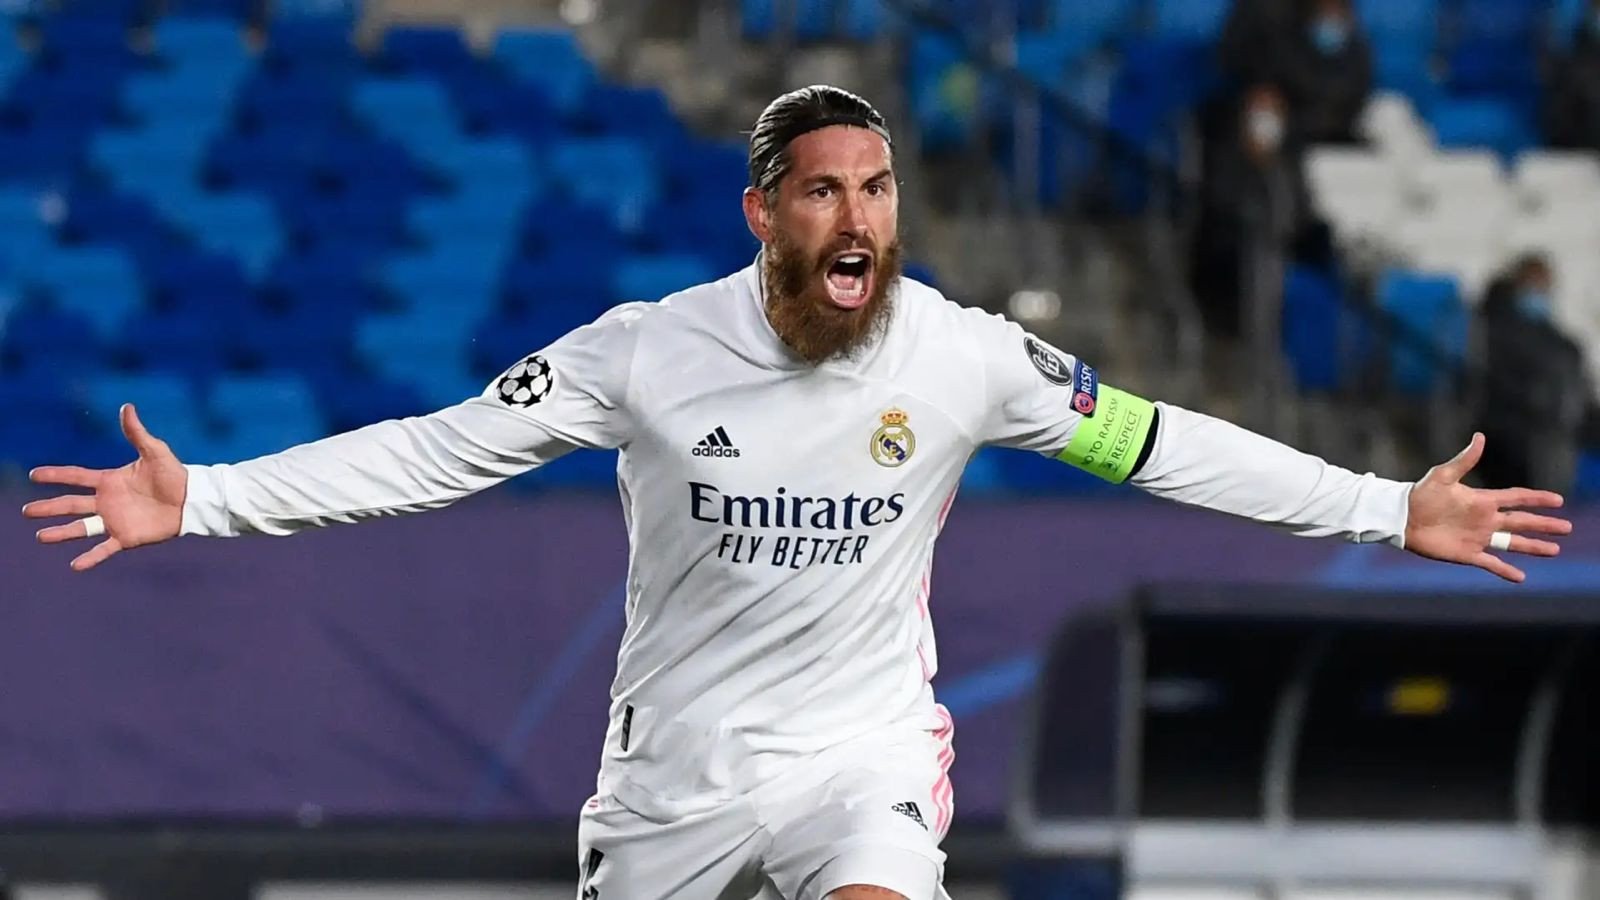 Ramos set for Real Madrid reunion as Sevilla start new era | The Express Tribune